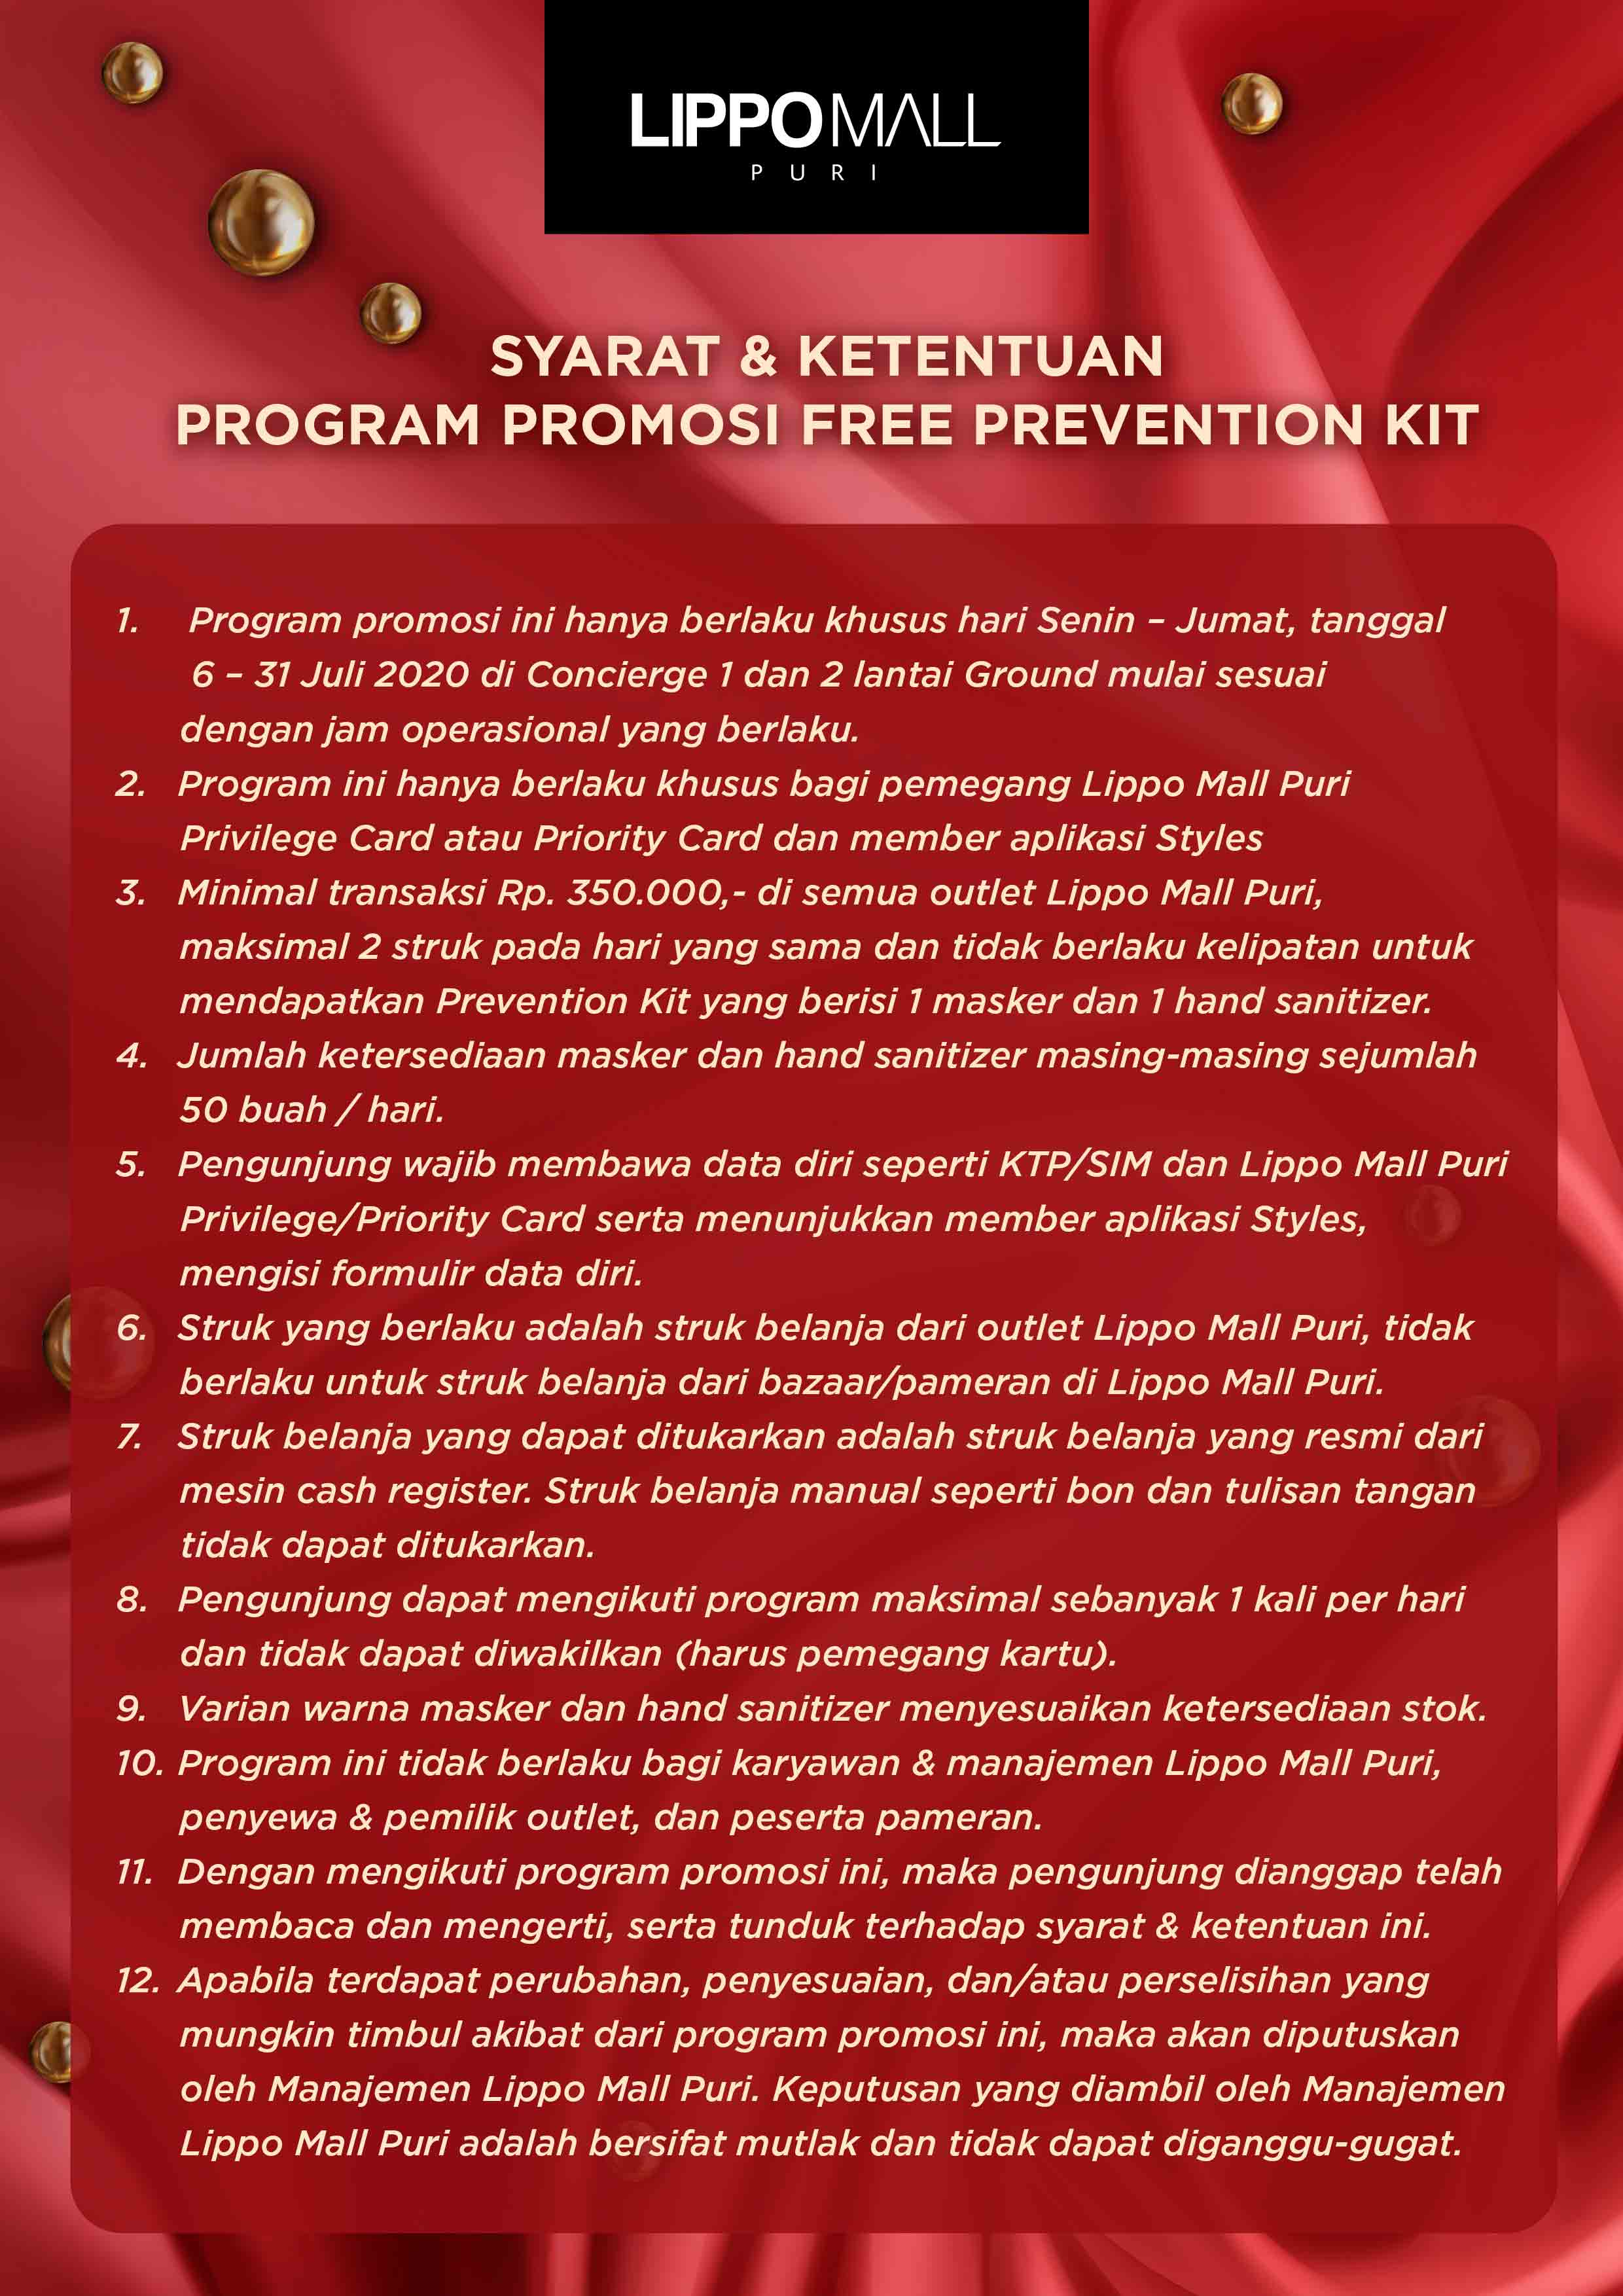 Free Prevention Kit Promo in lippo mall puri st. moritz